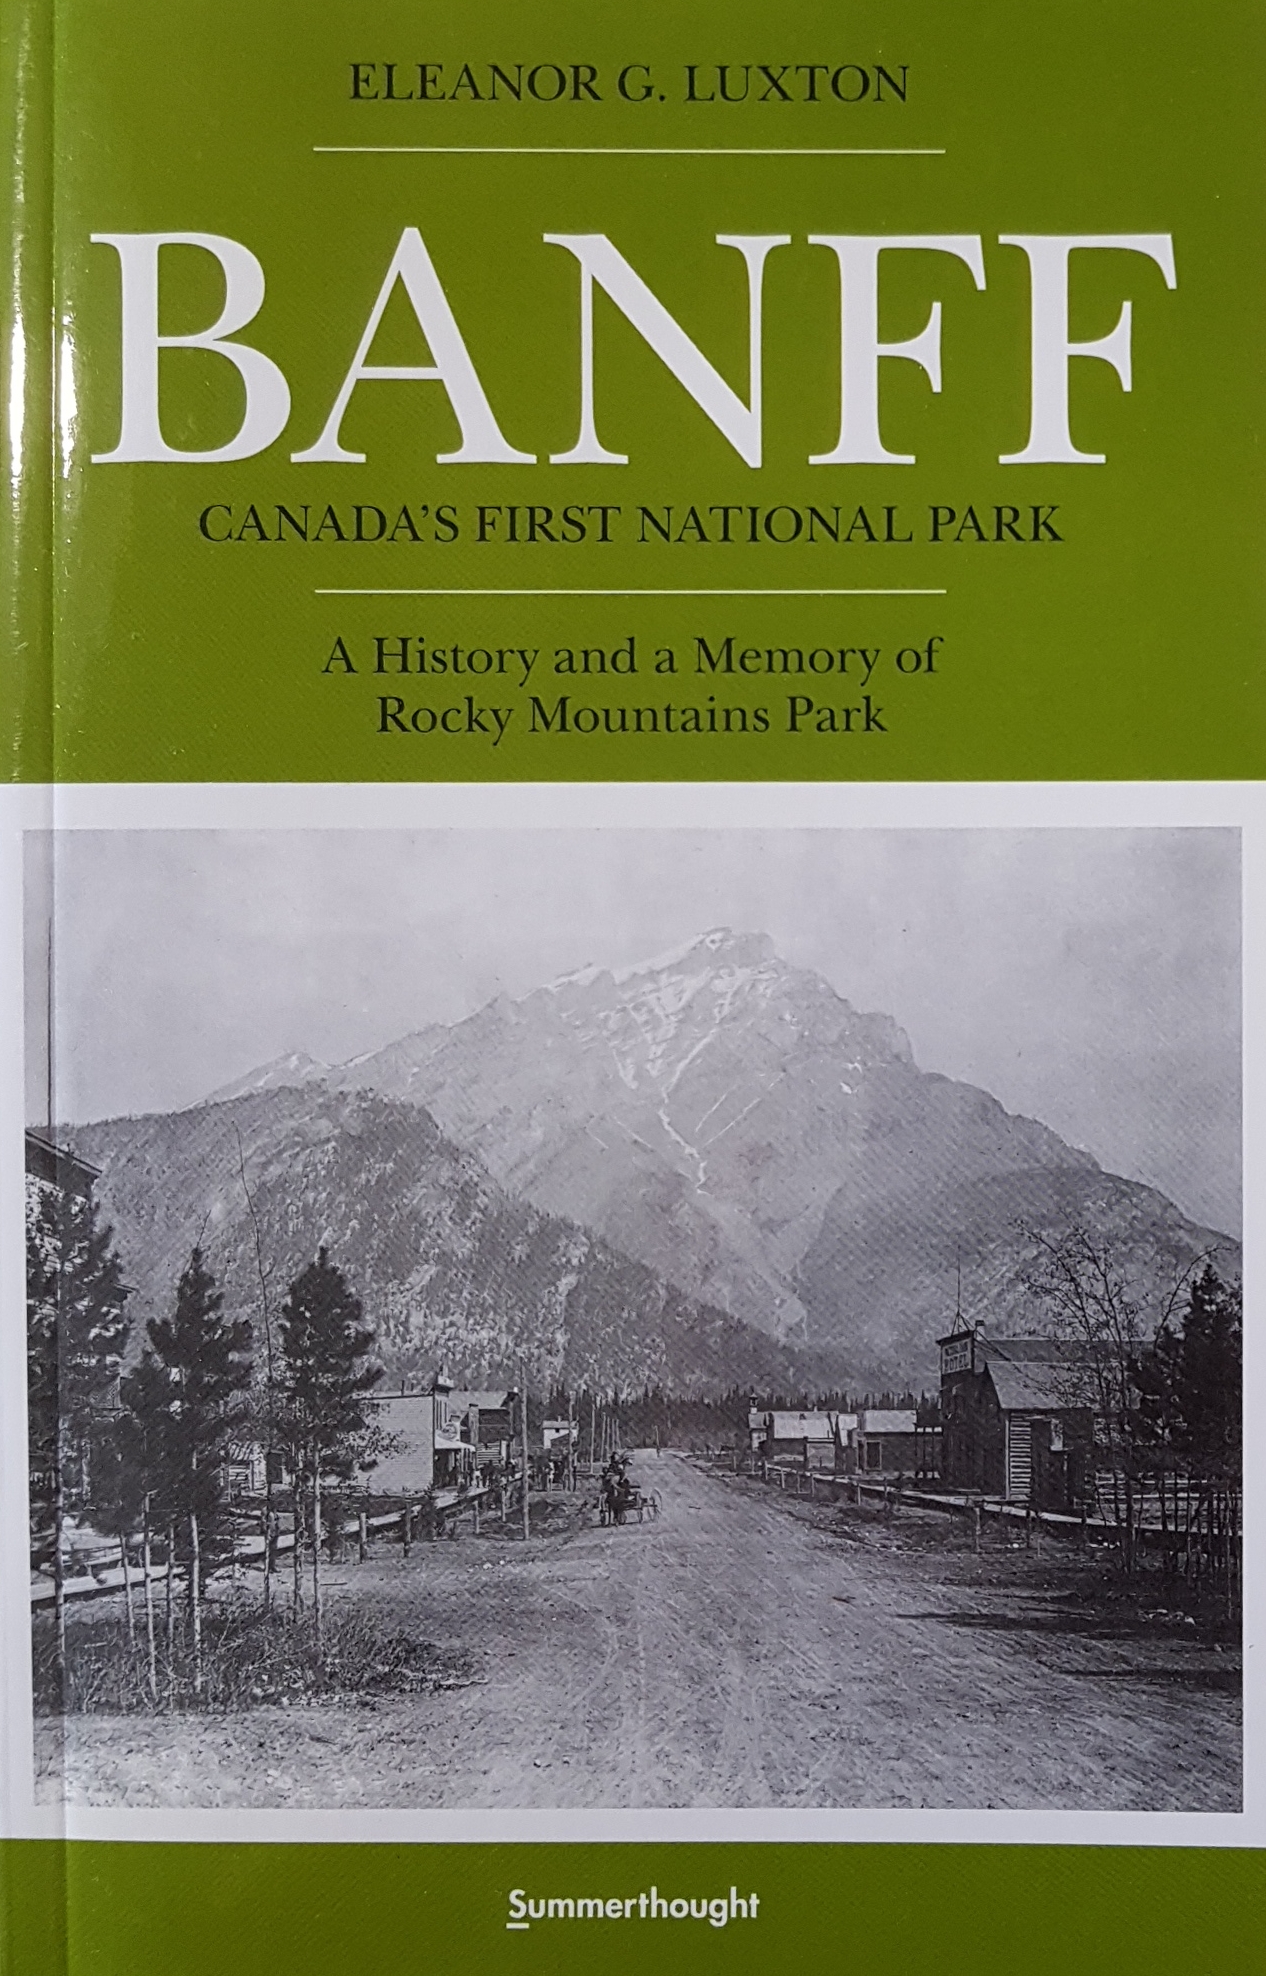 ELHF Book Banff